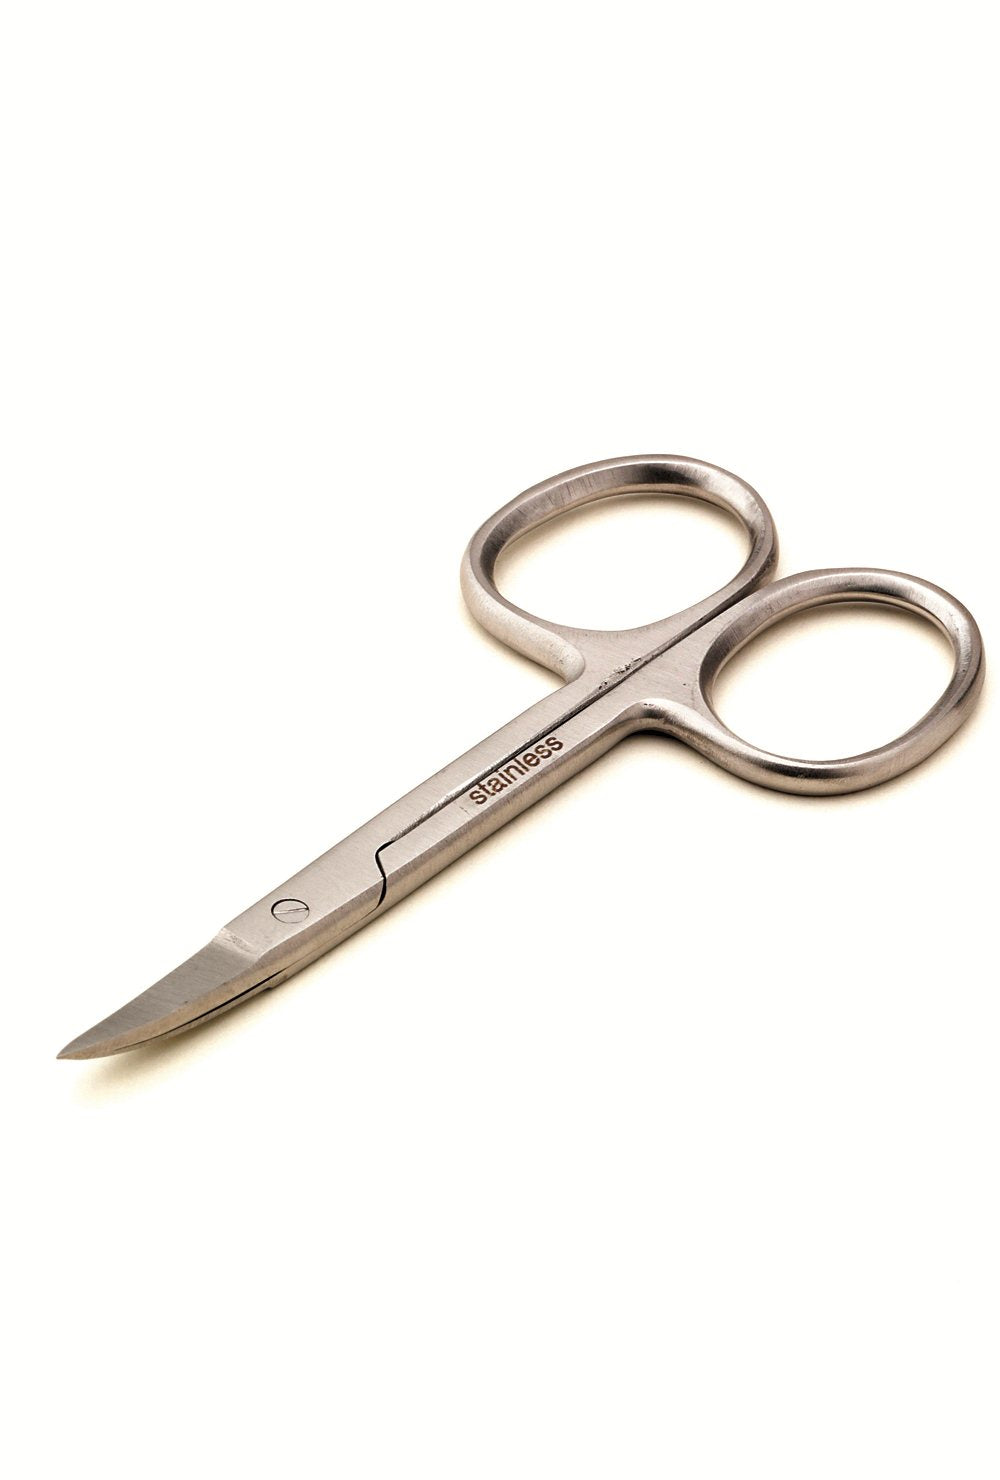 Strictly Professional - Cuticle Scissor